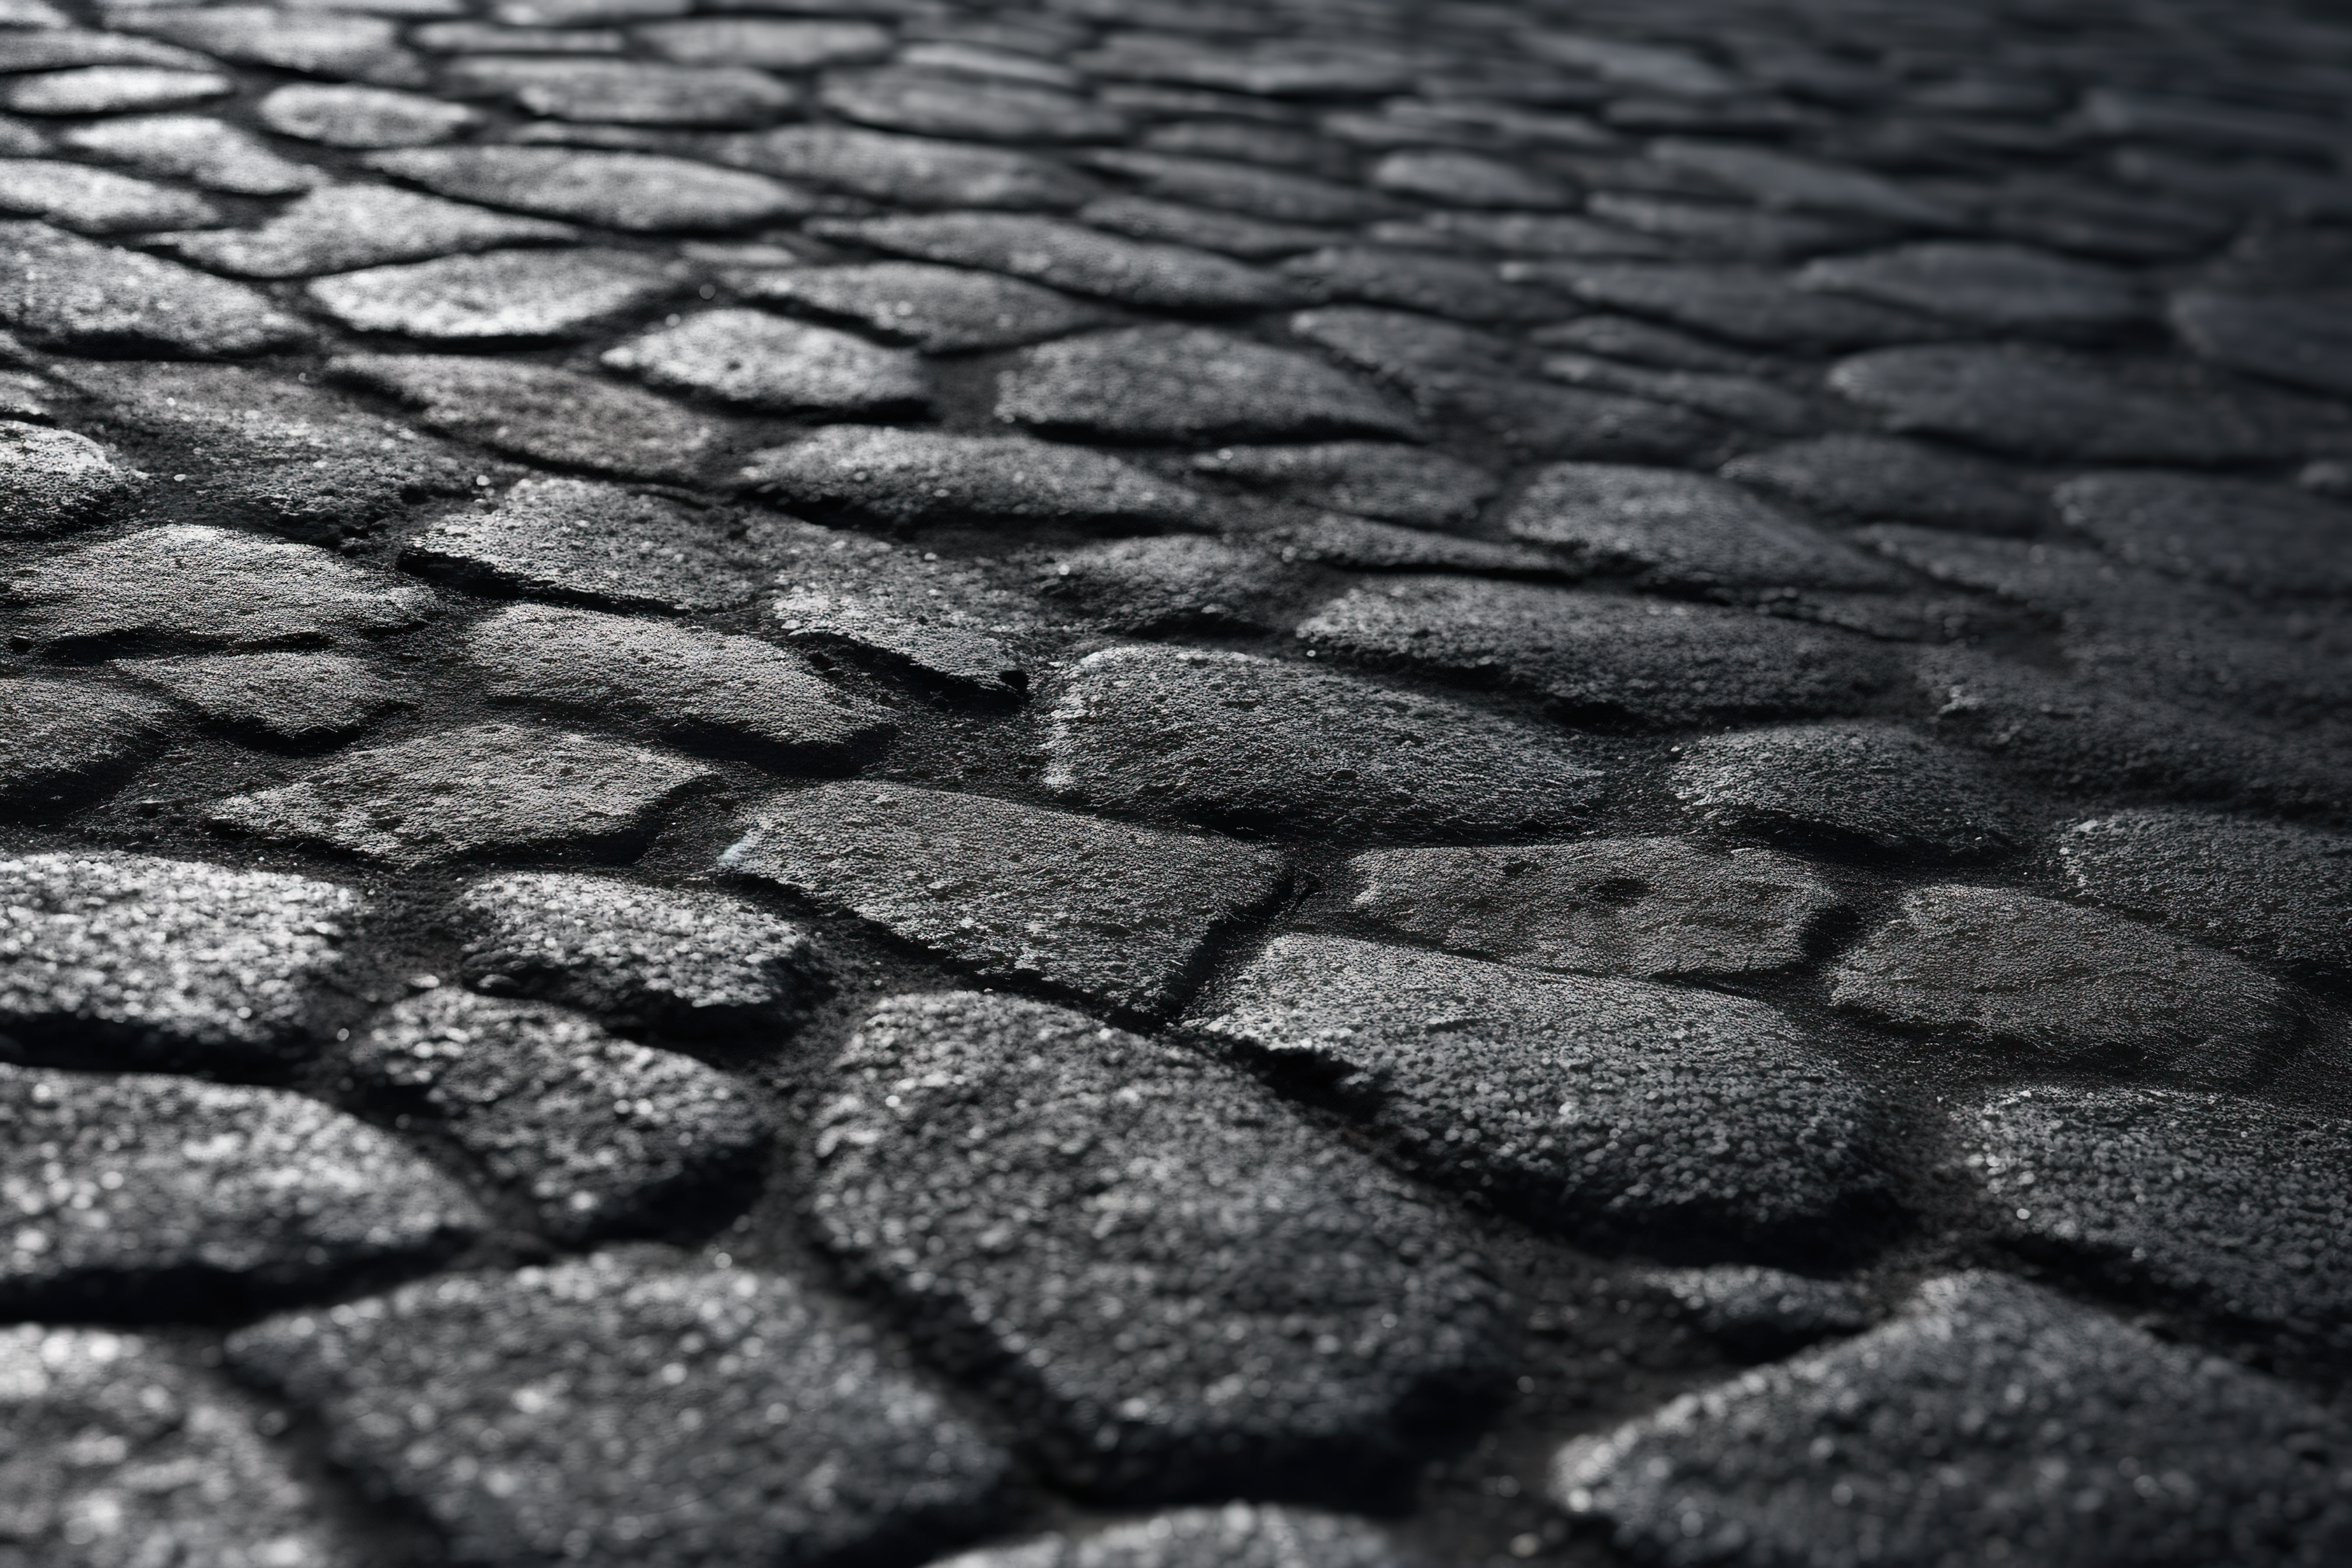 the texture of asphalt paving stones, stone road